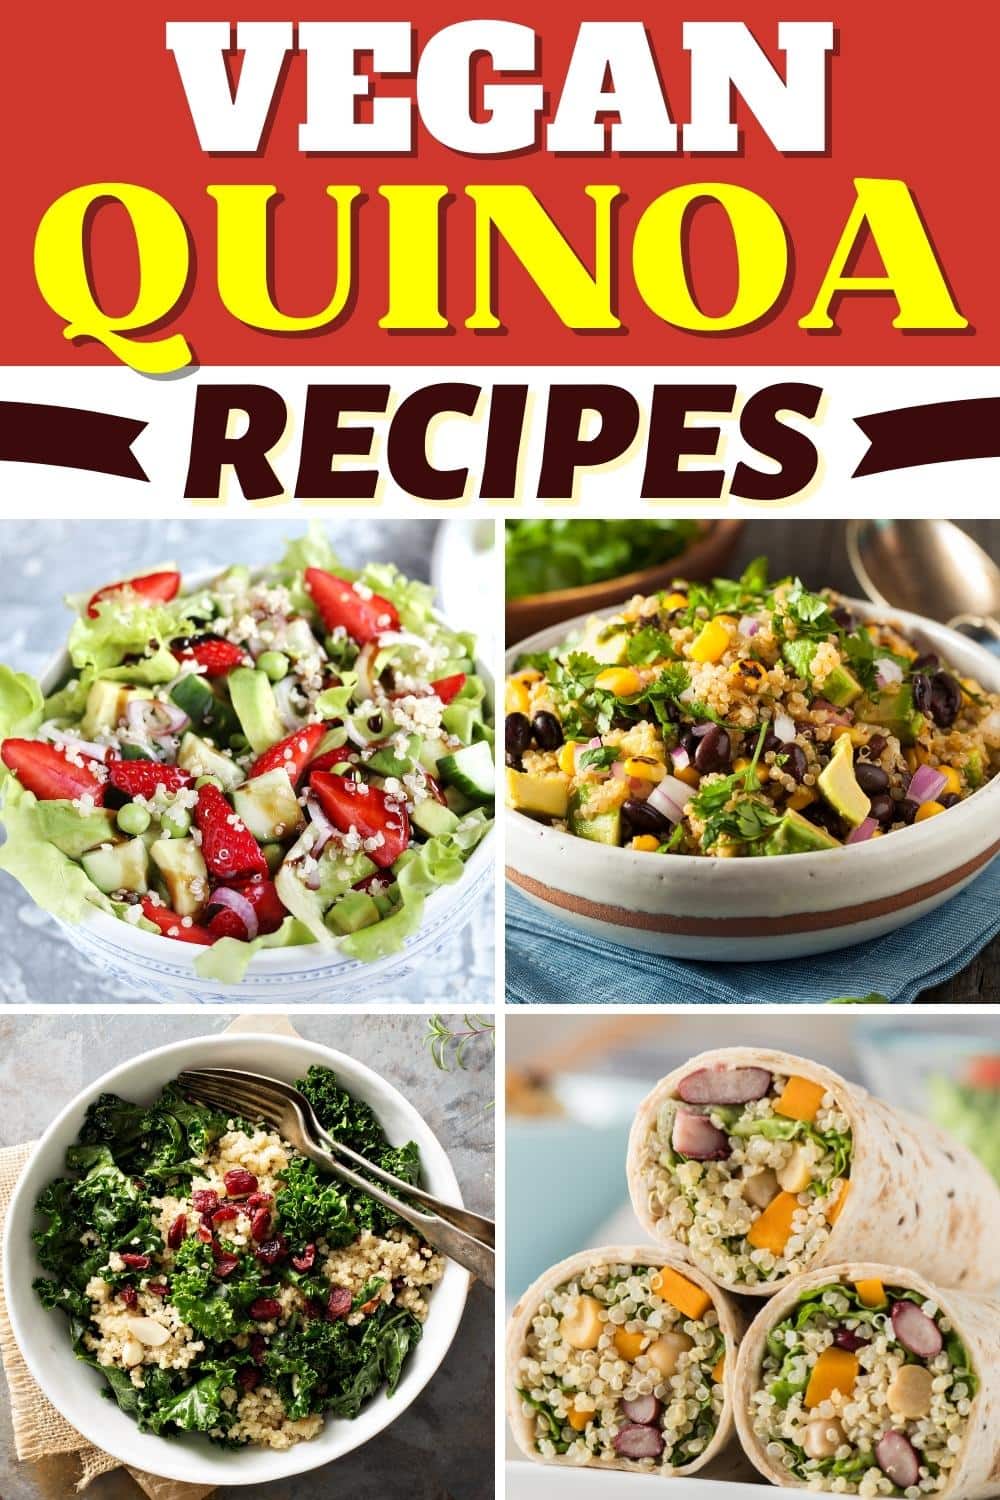 25 Best Vegan Quinoa Recipes (+ Easy Dinner Ideas) - Insanely Good